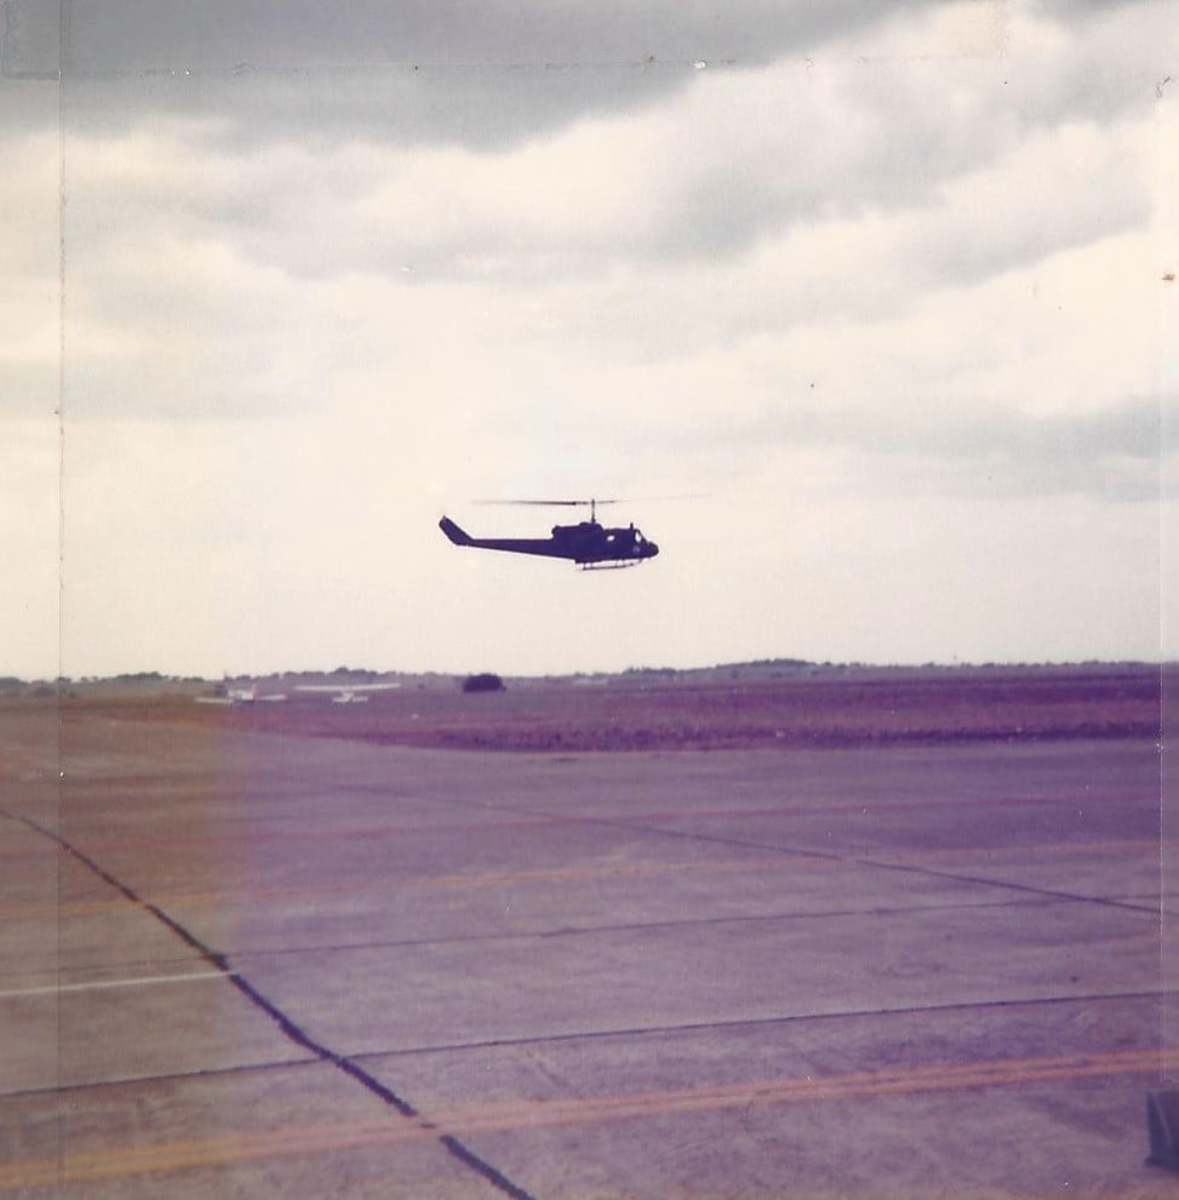 The Bell UH-1 Iroquois aka Huey